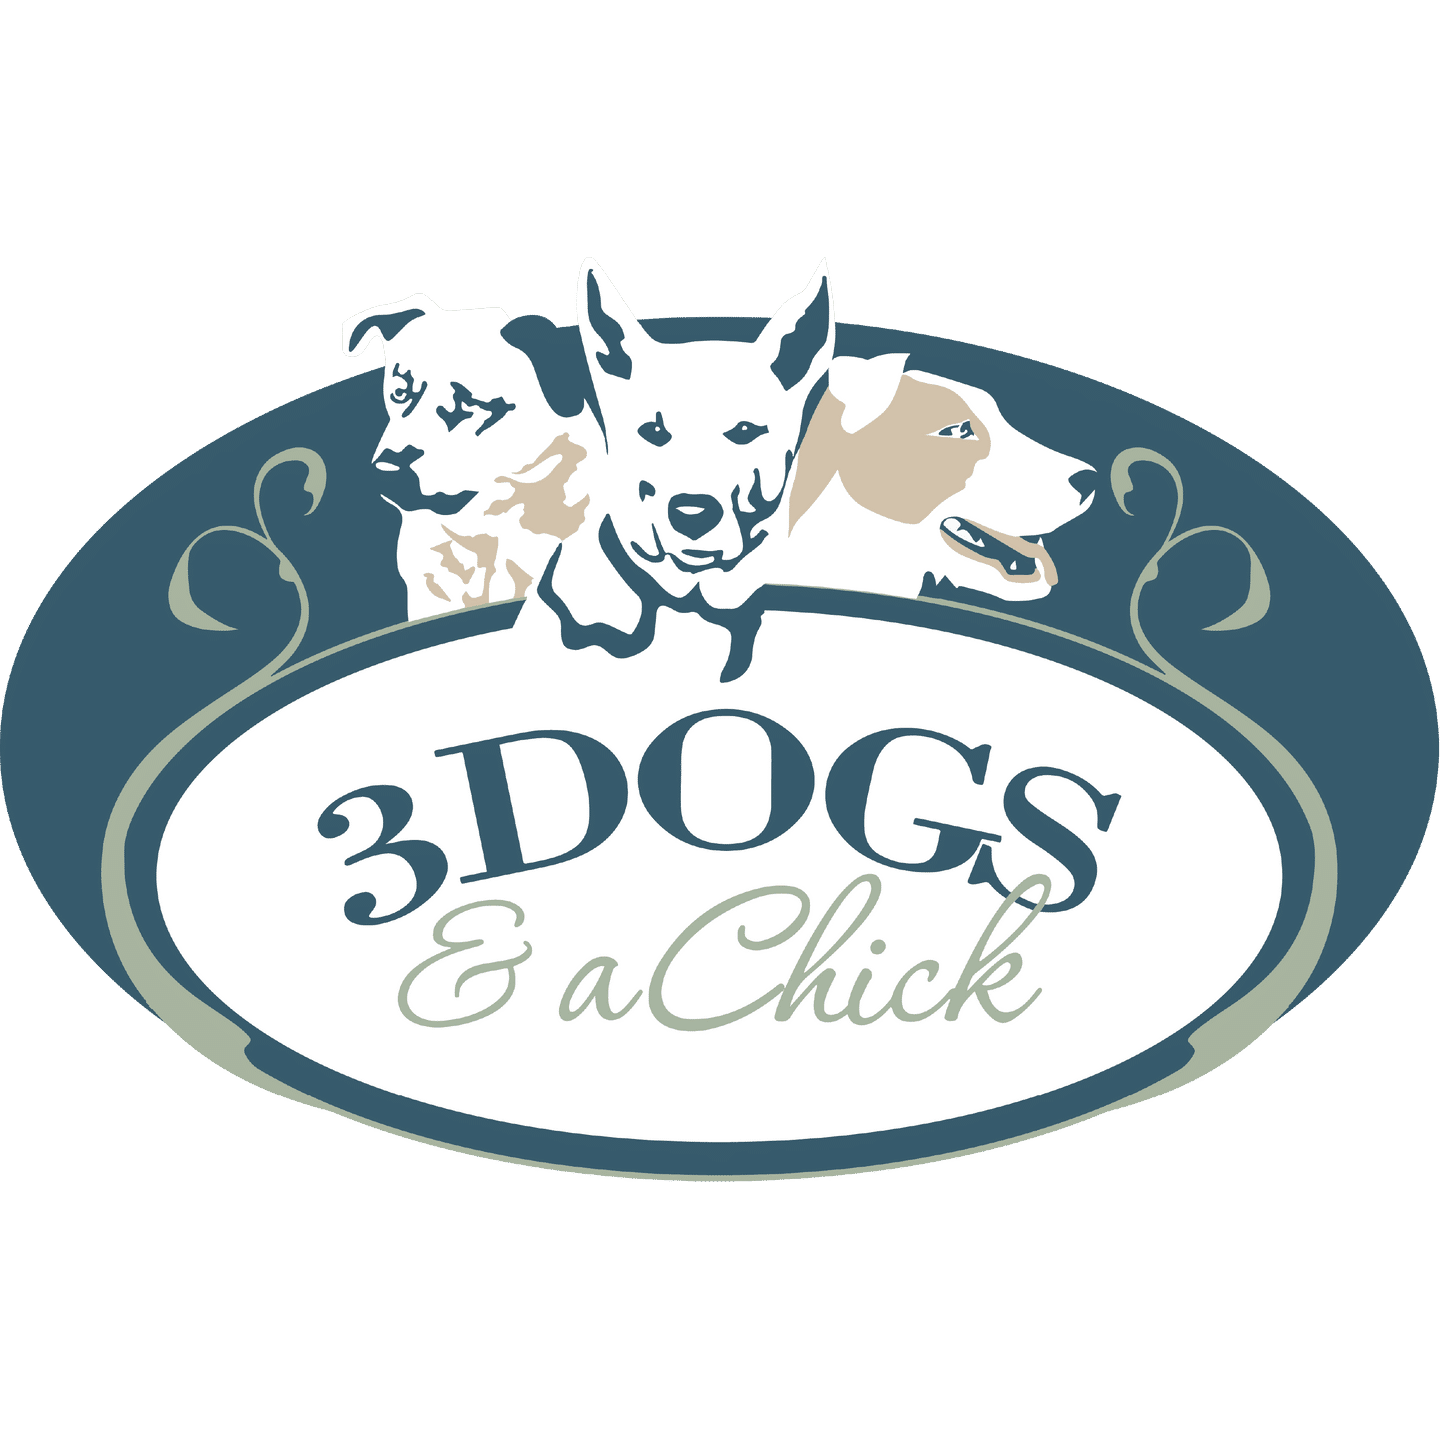 3 Dogs and a Chick - Fort Walton Beach, FL 32548 - (850)243-7297 | ShowMeLocal.com